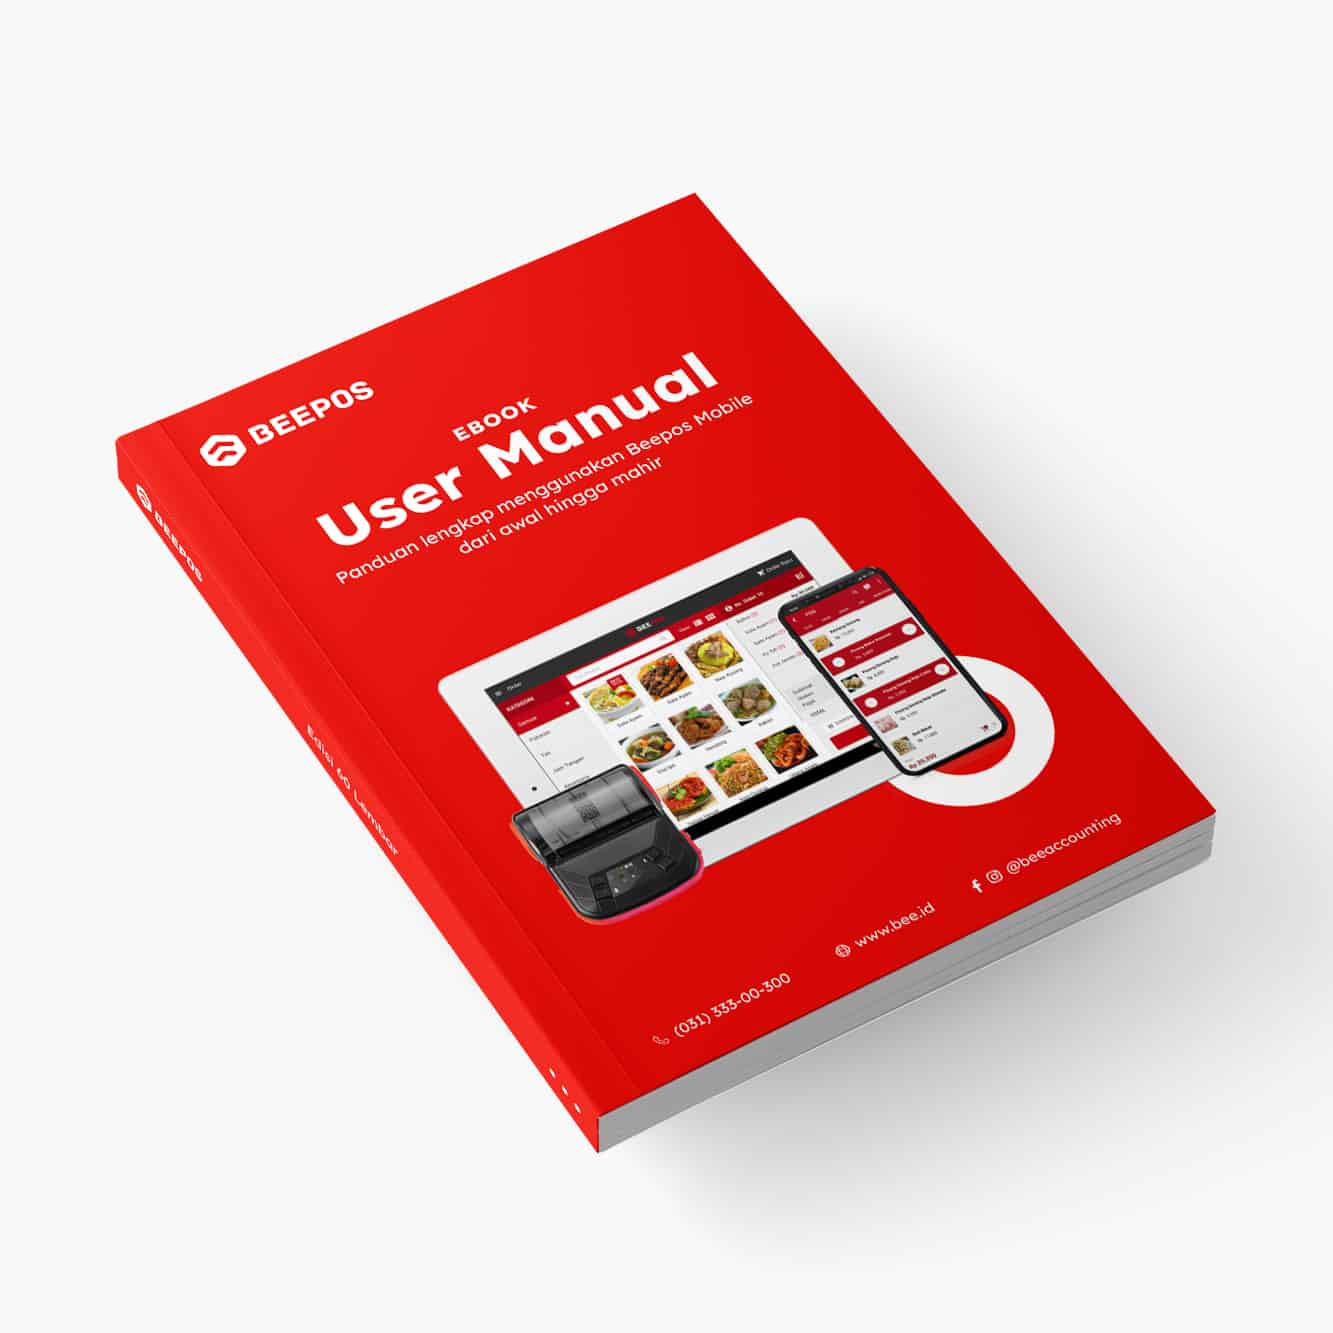 Beepos Mobile Ebook User Manual